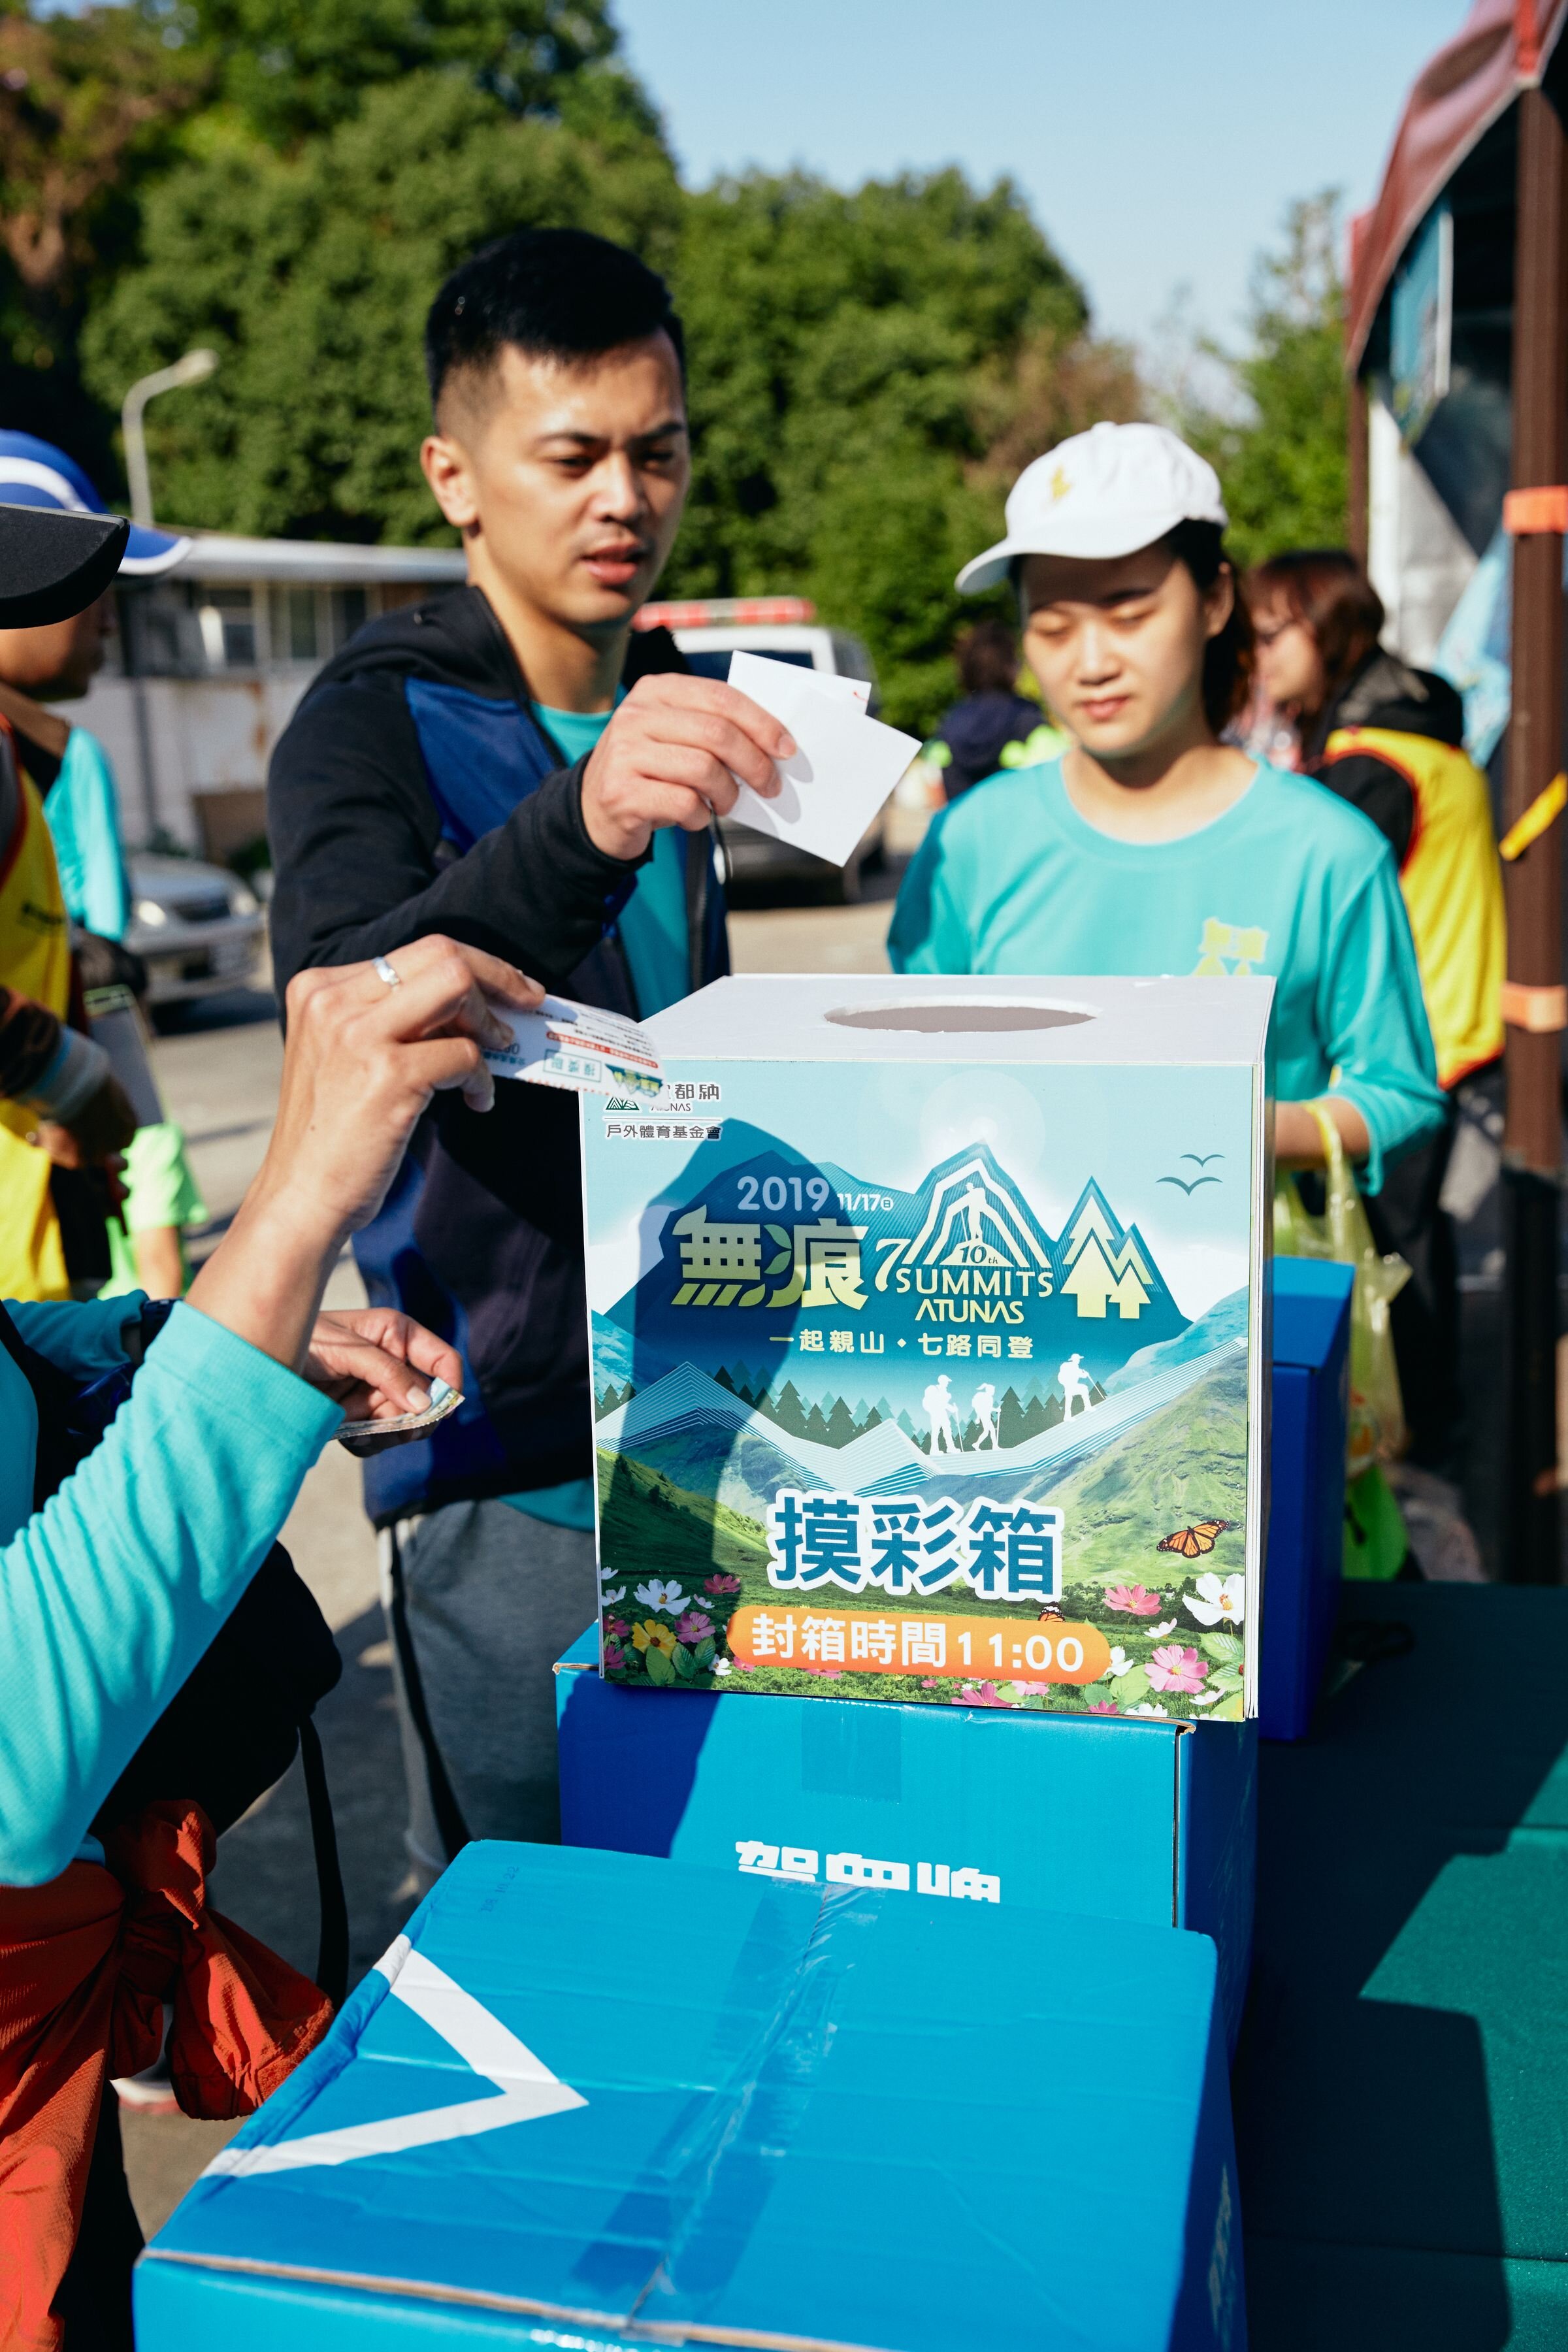 20191117-events-atunas-hiking-taipei-歐都納-無痕山林-永春高中-台北場_27.jpg